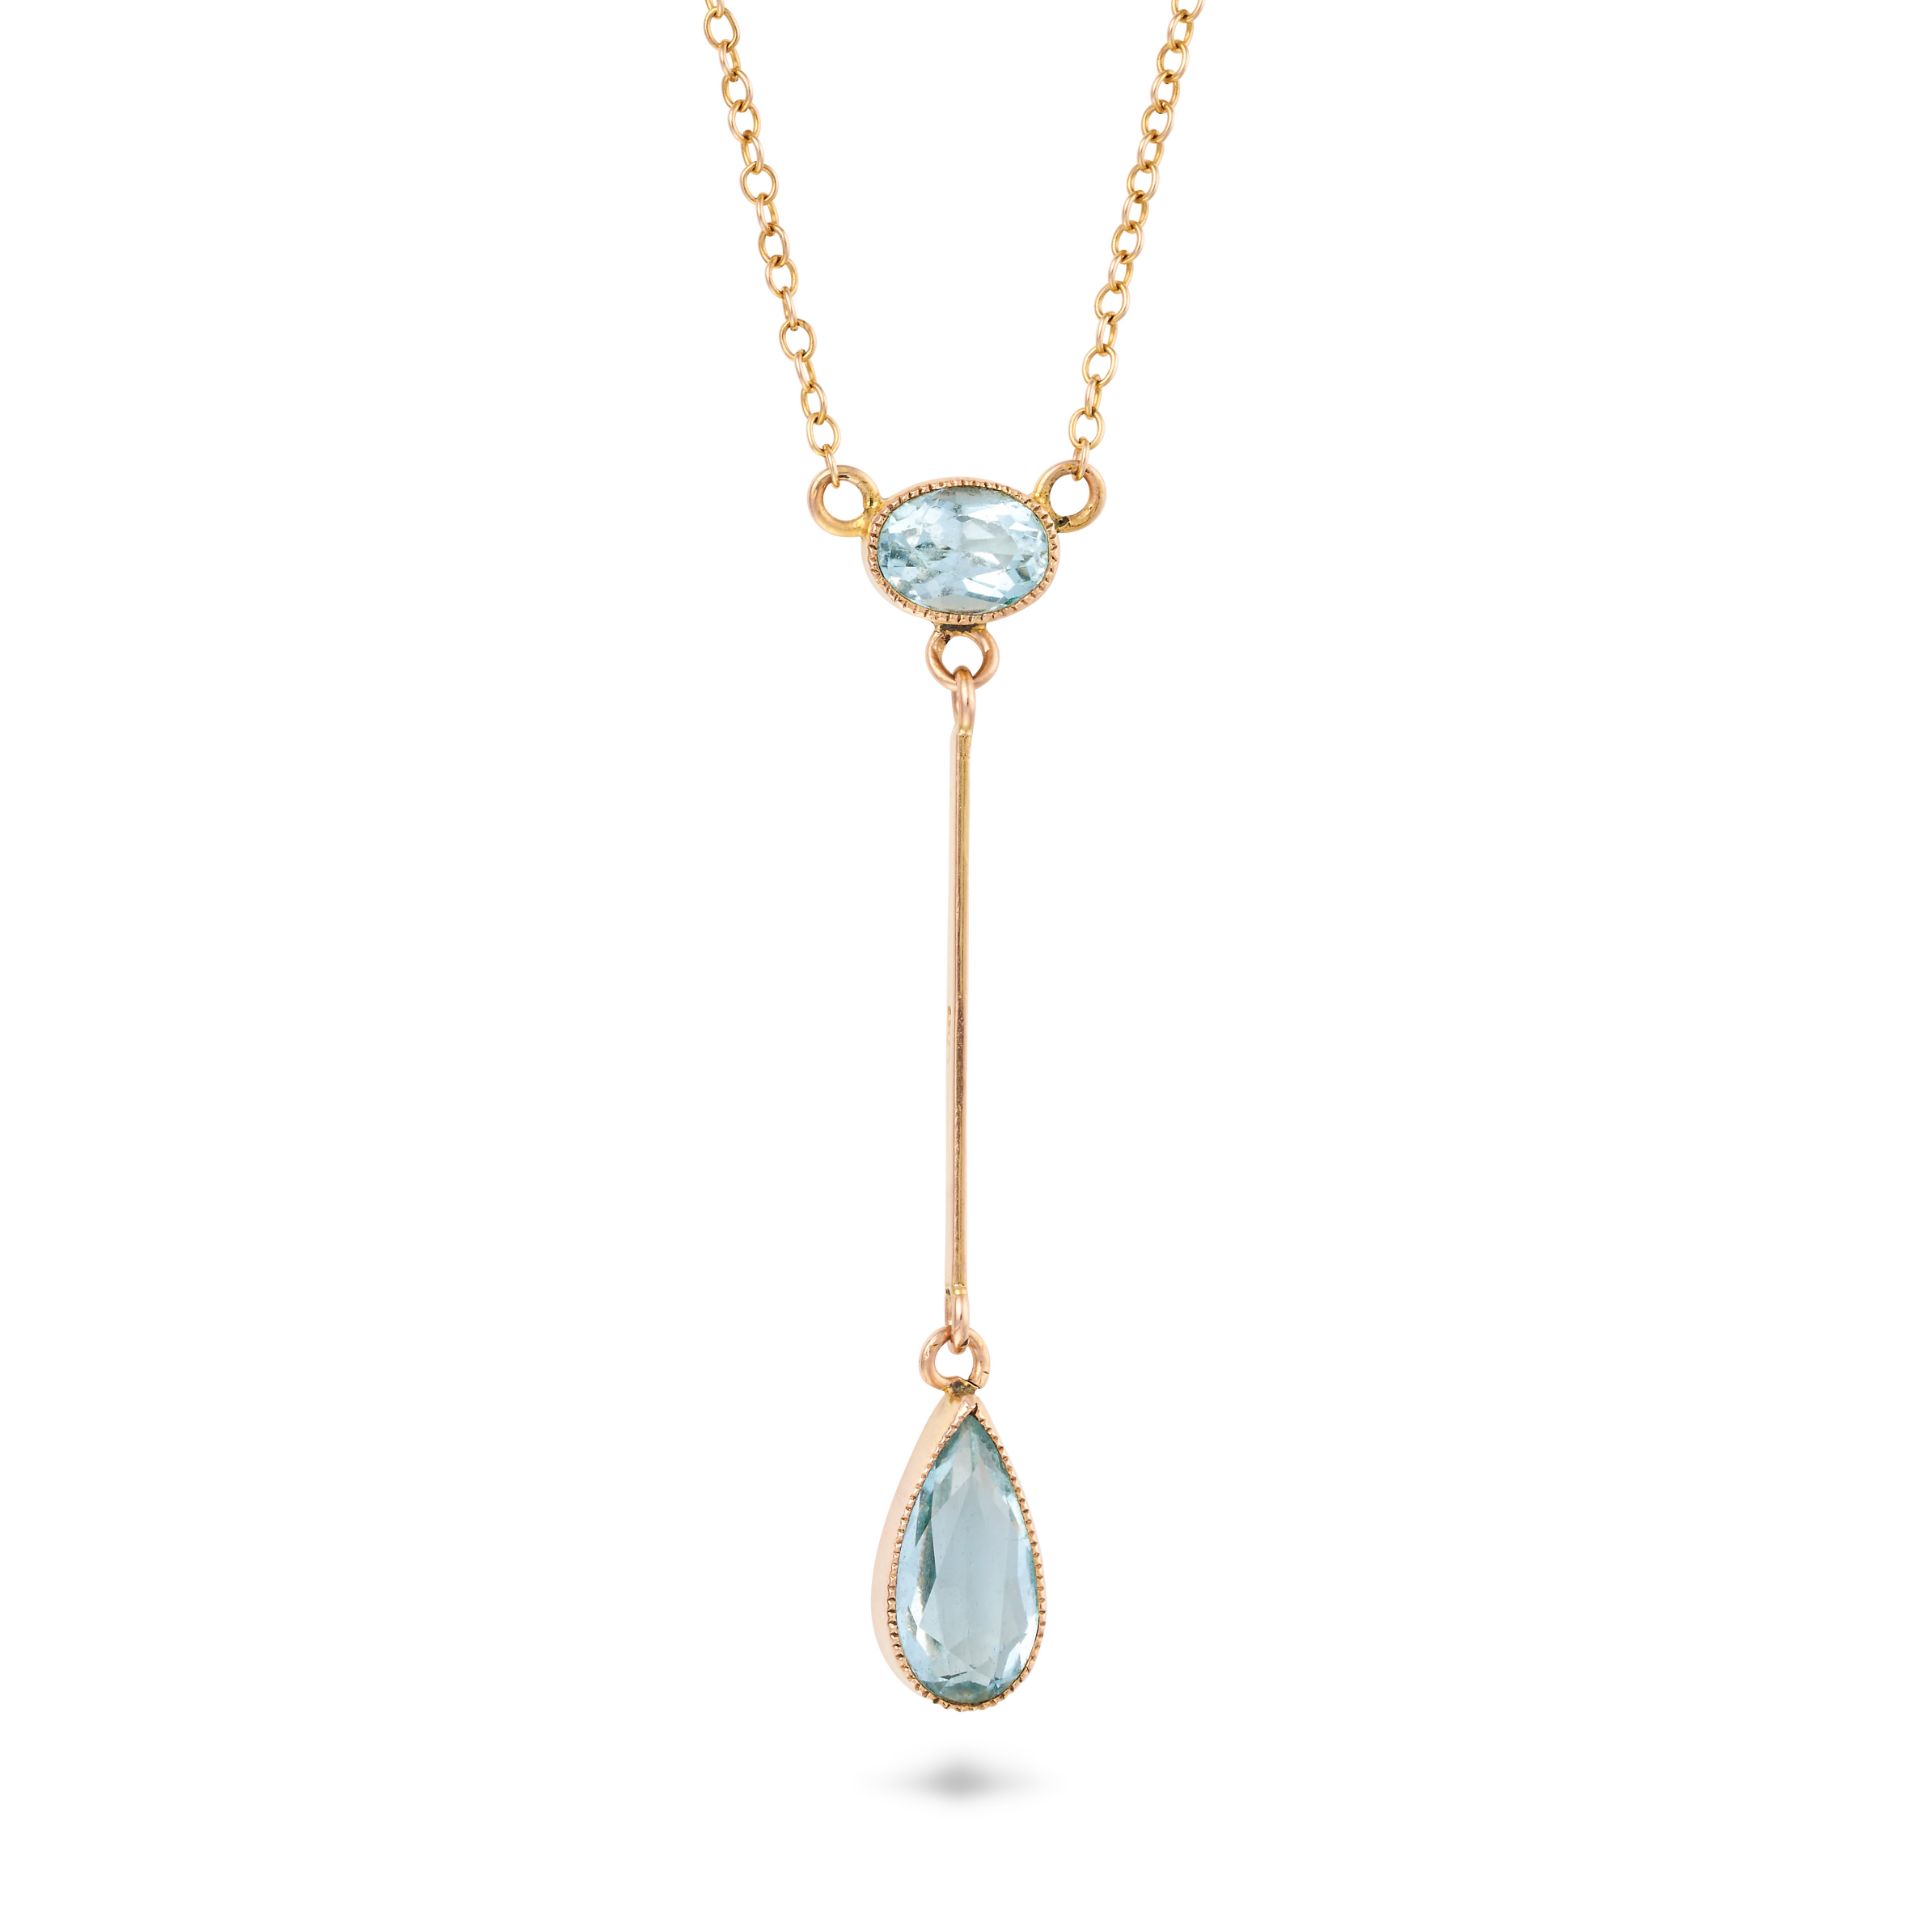 NO RESERVE - AN AQUAMARINE PENDANT NECKLACE the pendant set with an oval cut aquamarine suspendin...